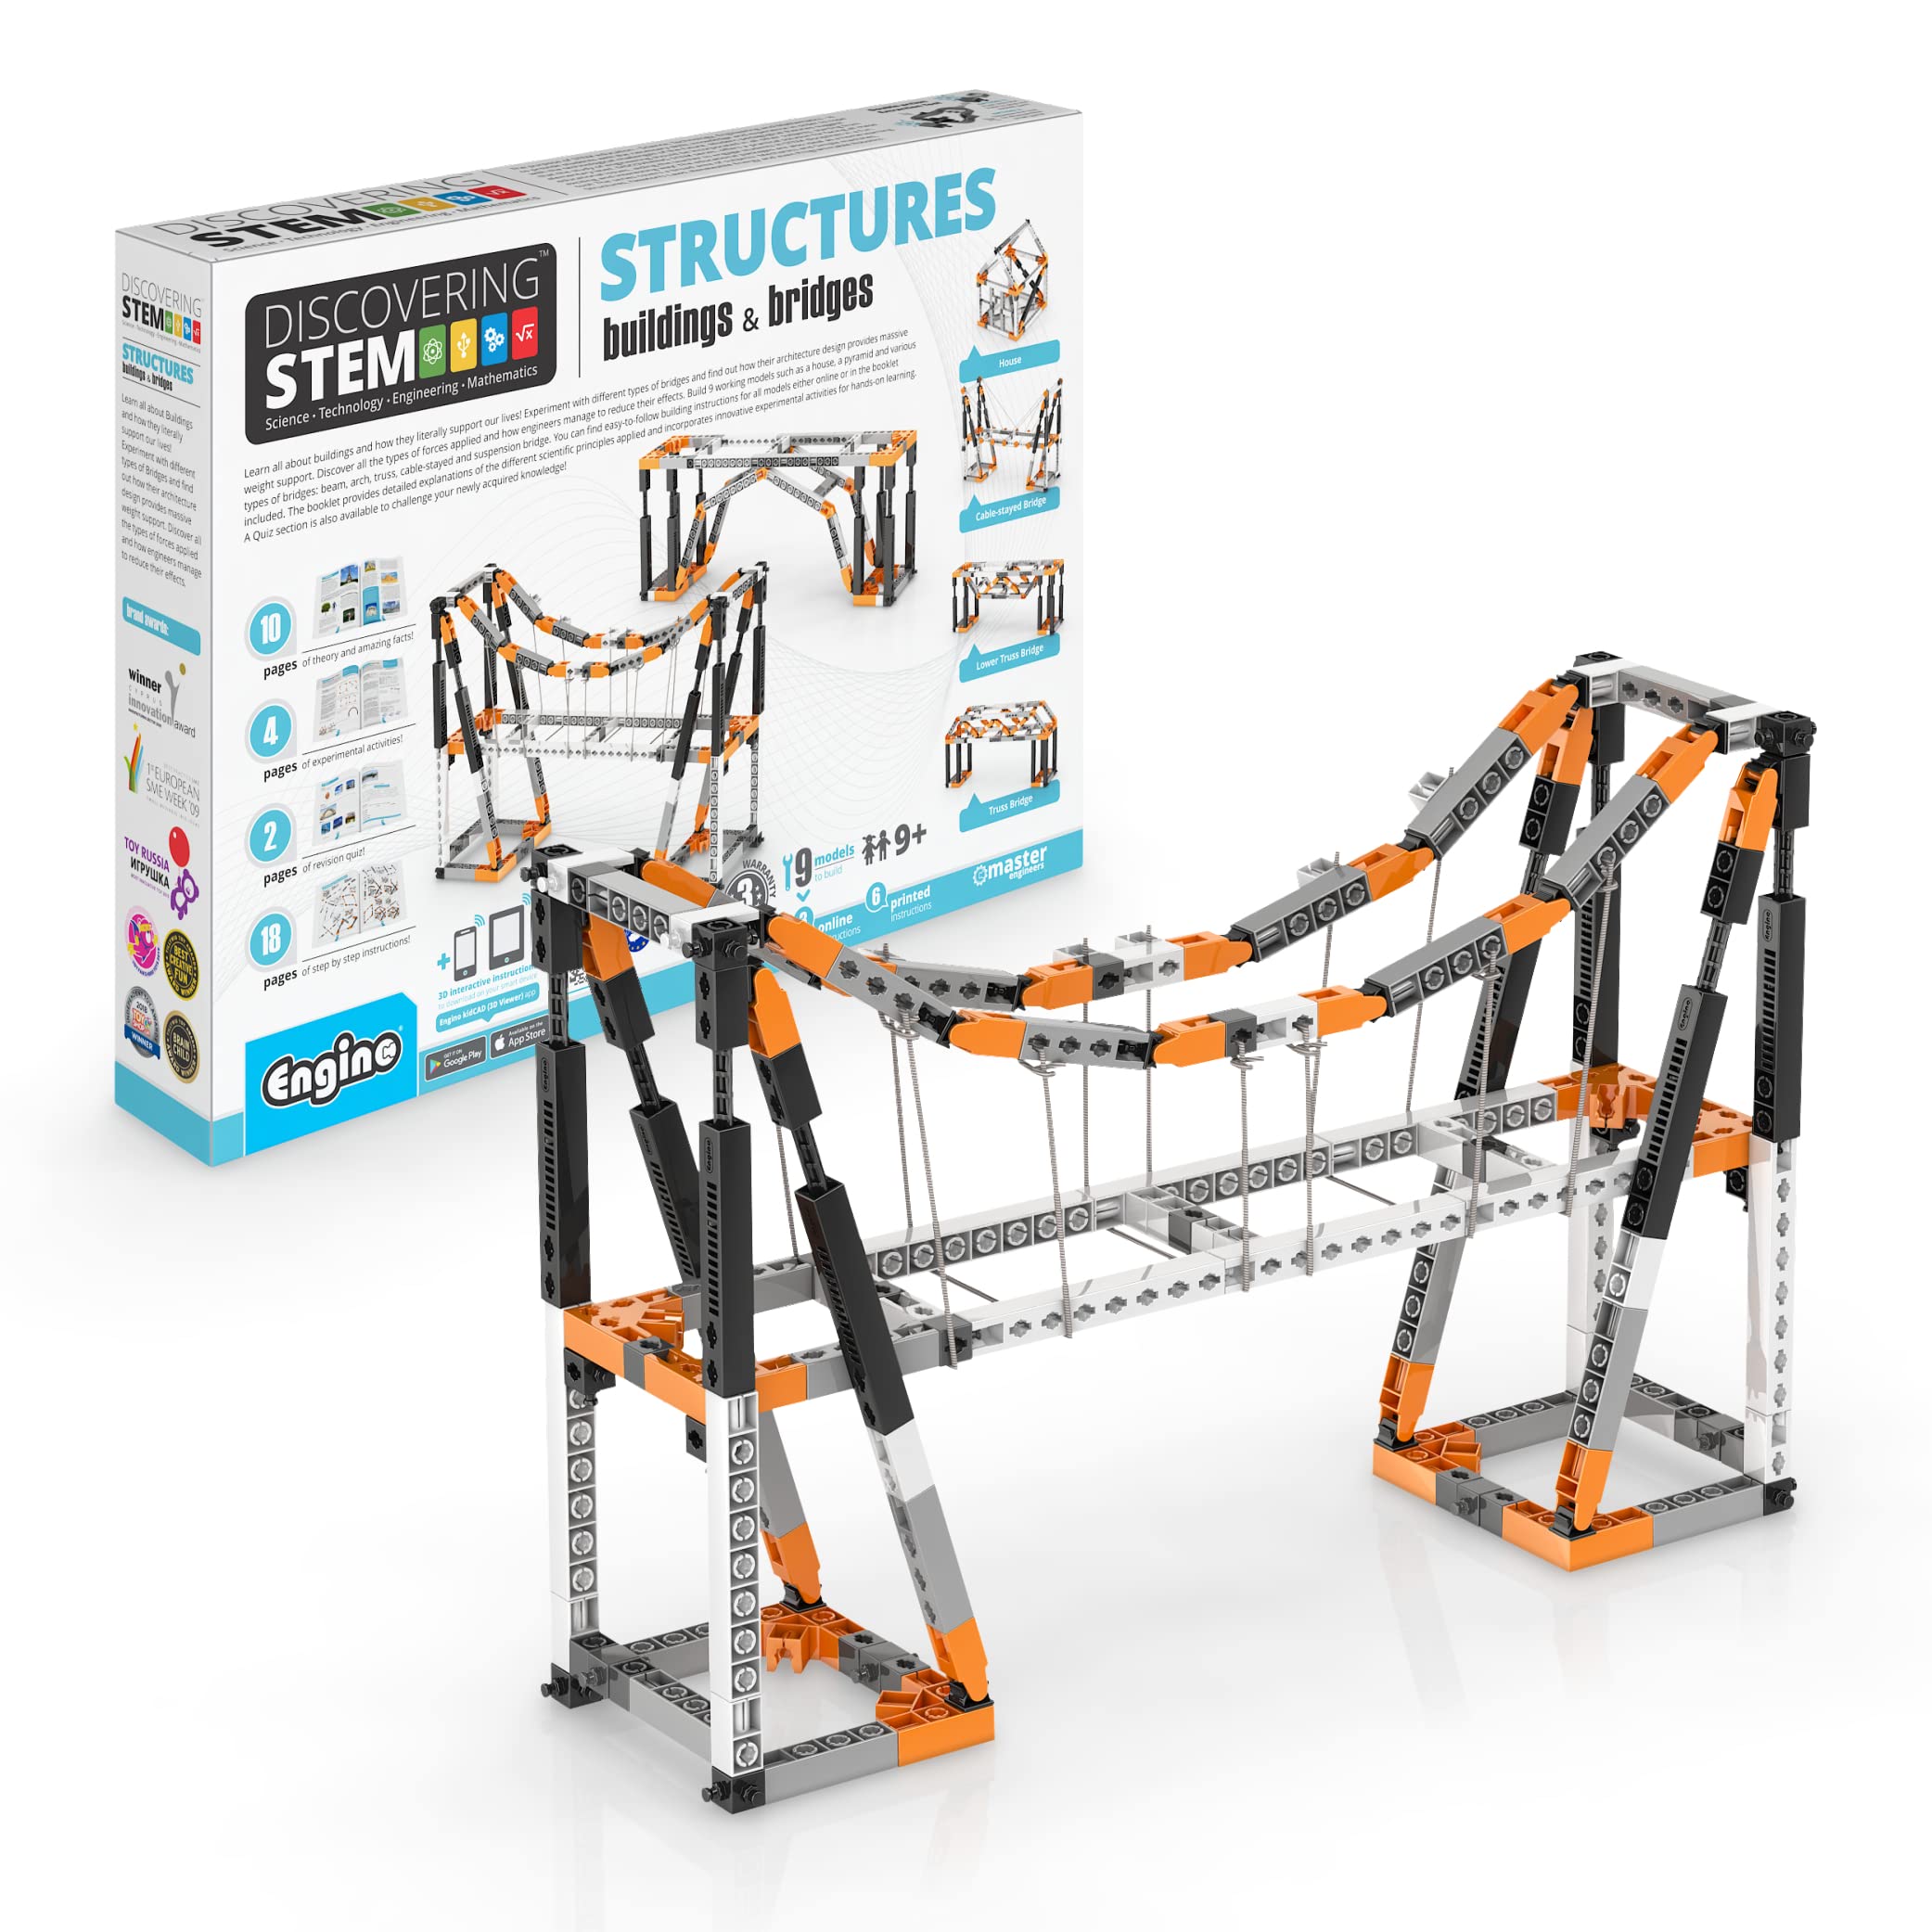 Engino- STEM Toys, Buildings & Bridges, Construction Toys for Kids 9+, Educational Toys, Gifts for Boys & Girls (9 Model Options), STEM Kit for Learning